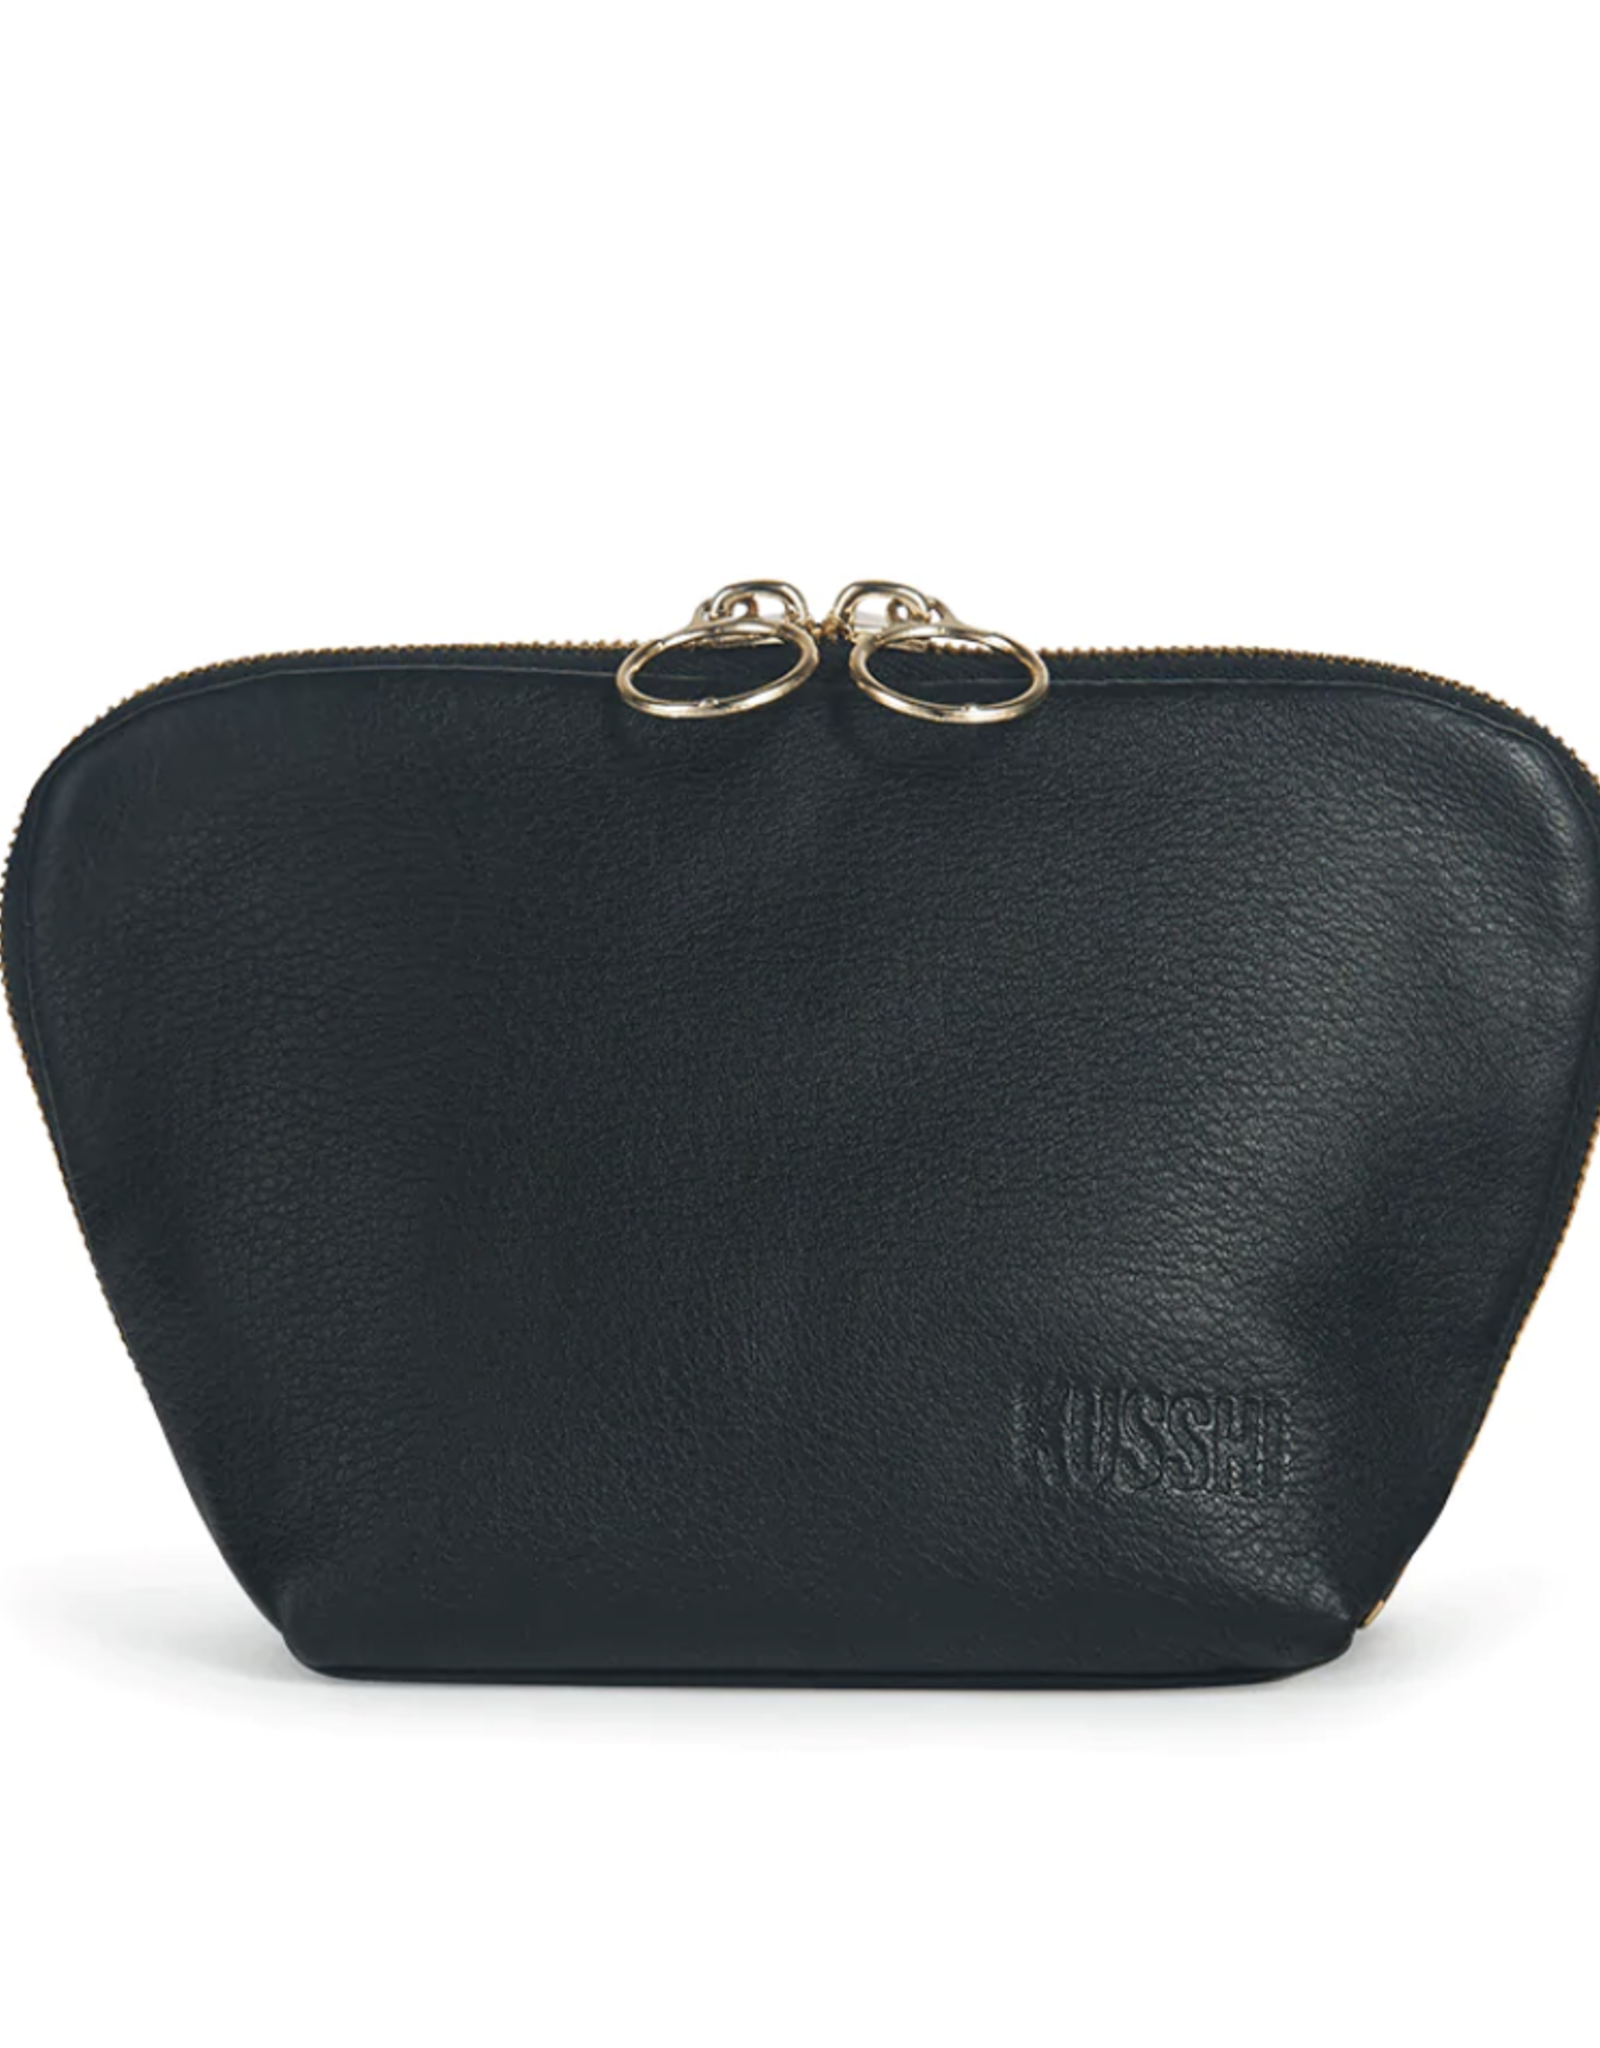 KUSSHI Kusshi Everyday Makeup Bag - Leather